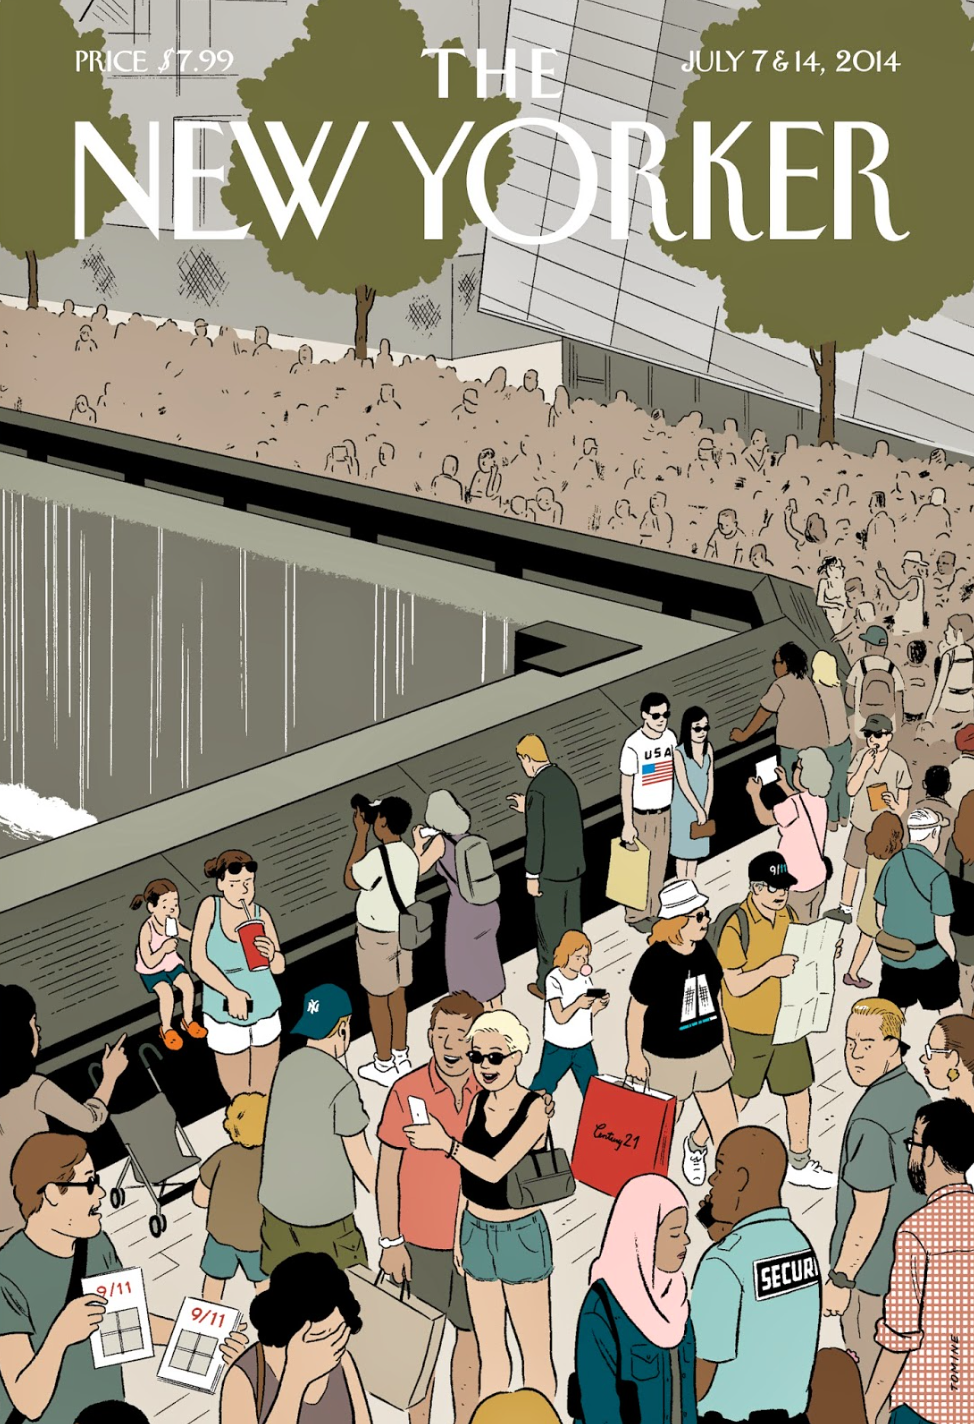 New Yorker cover, NY